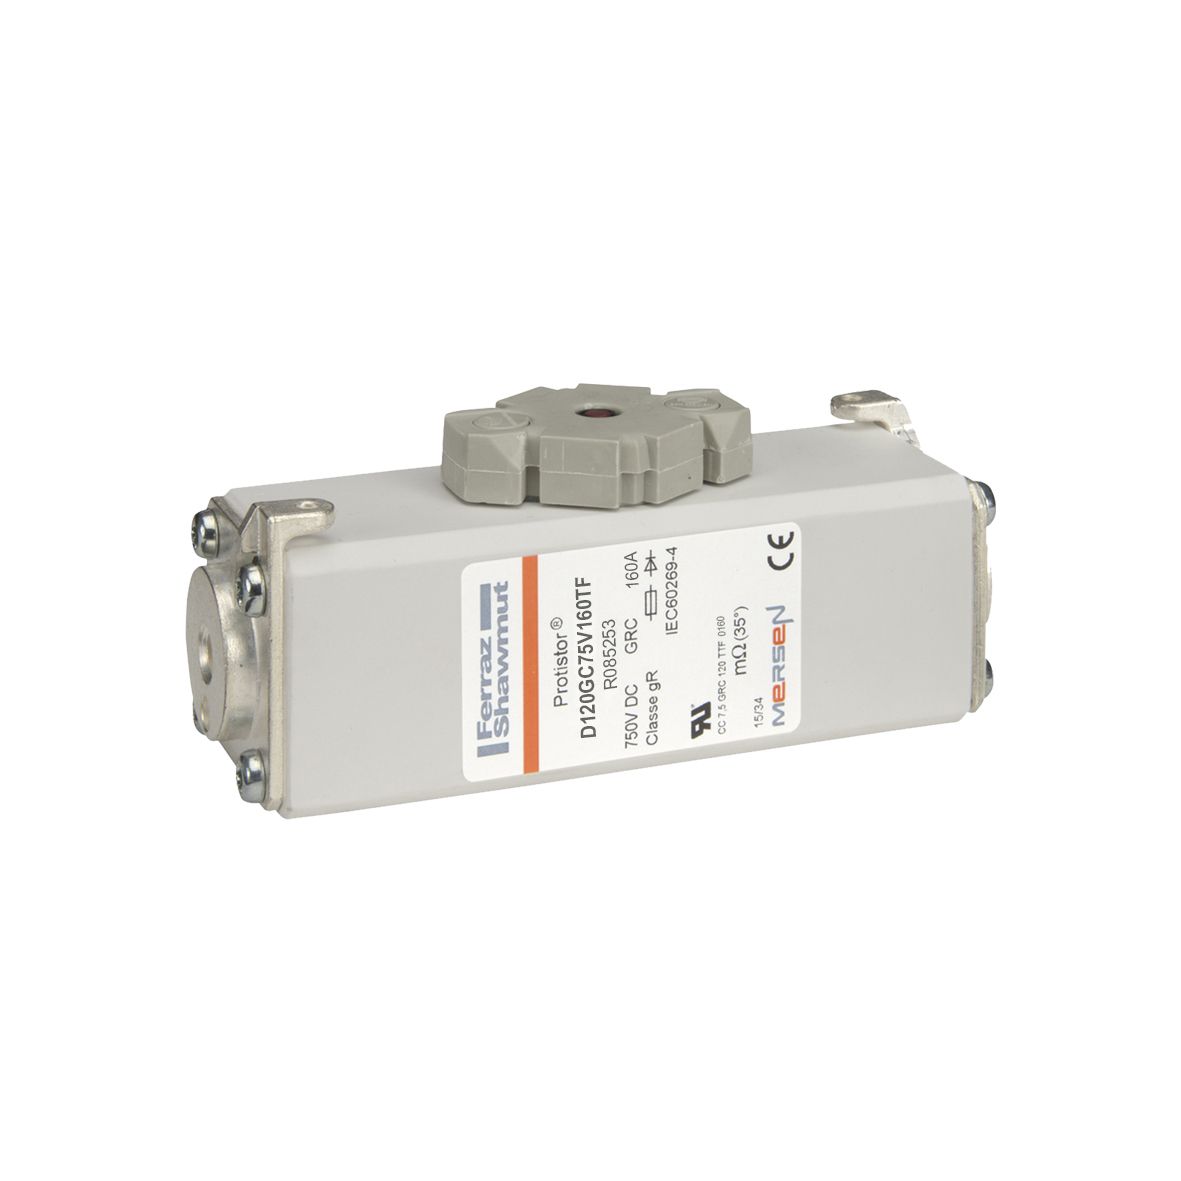 R085253 - Protistor SB fuse-link gR, 750VDC, size 120, 160A, TTF threaded terminals